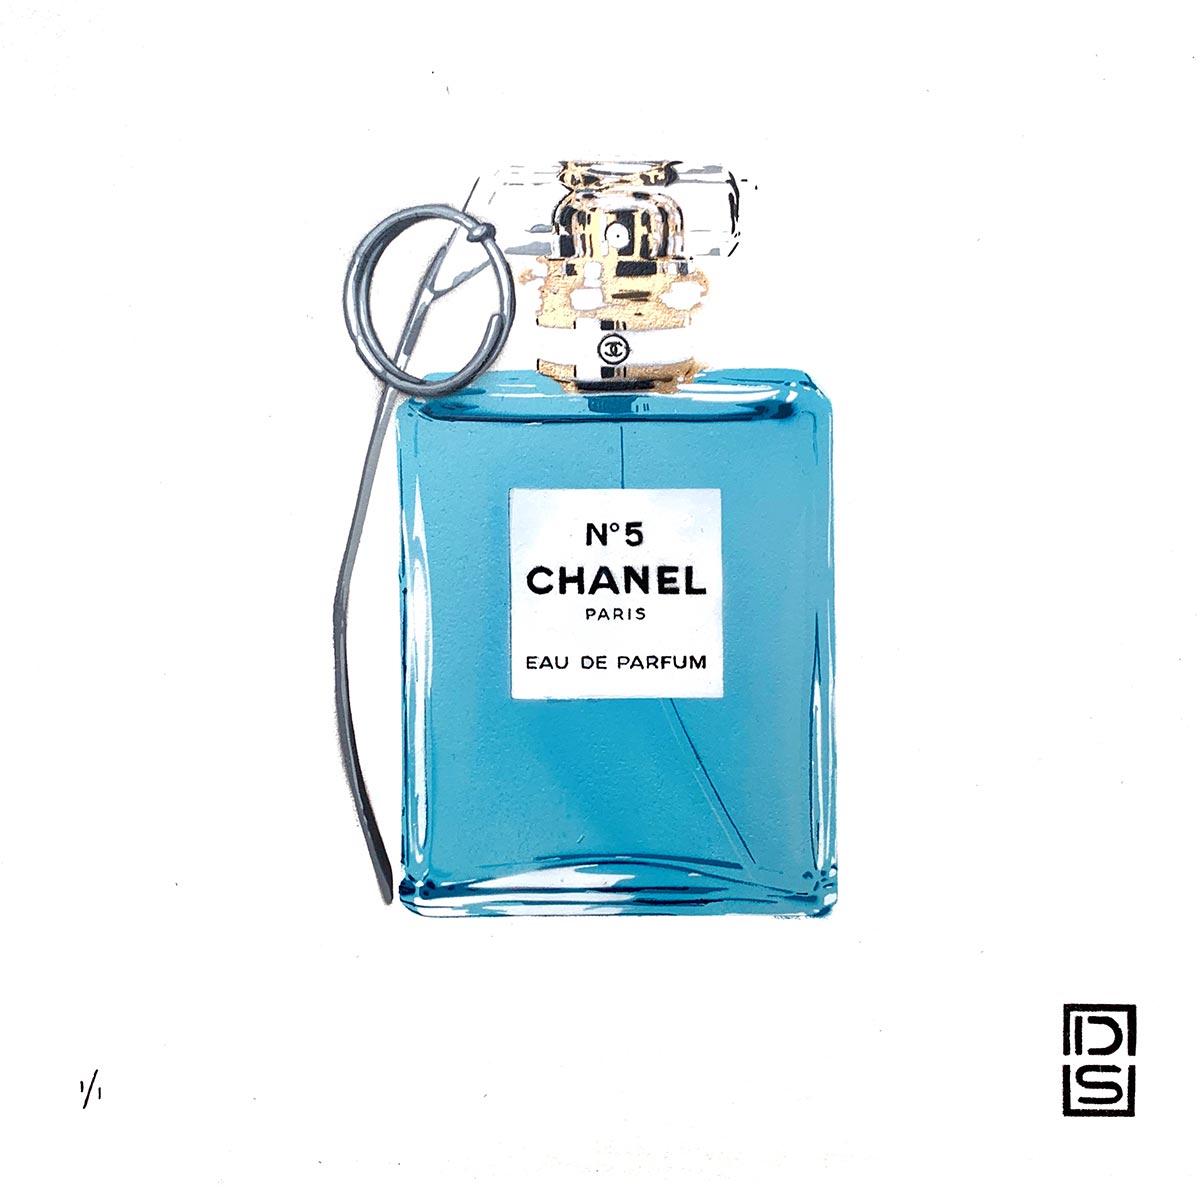 Chanel-blue stencil art